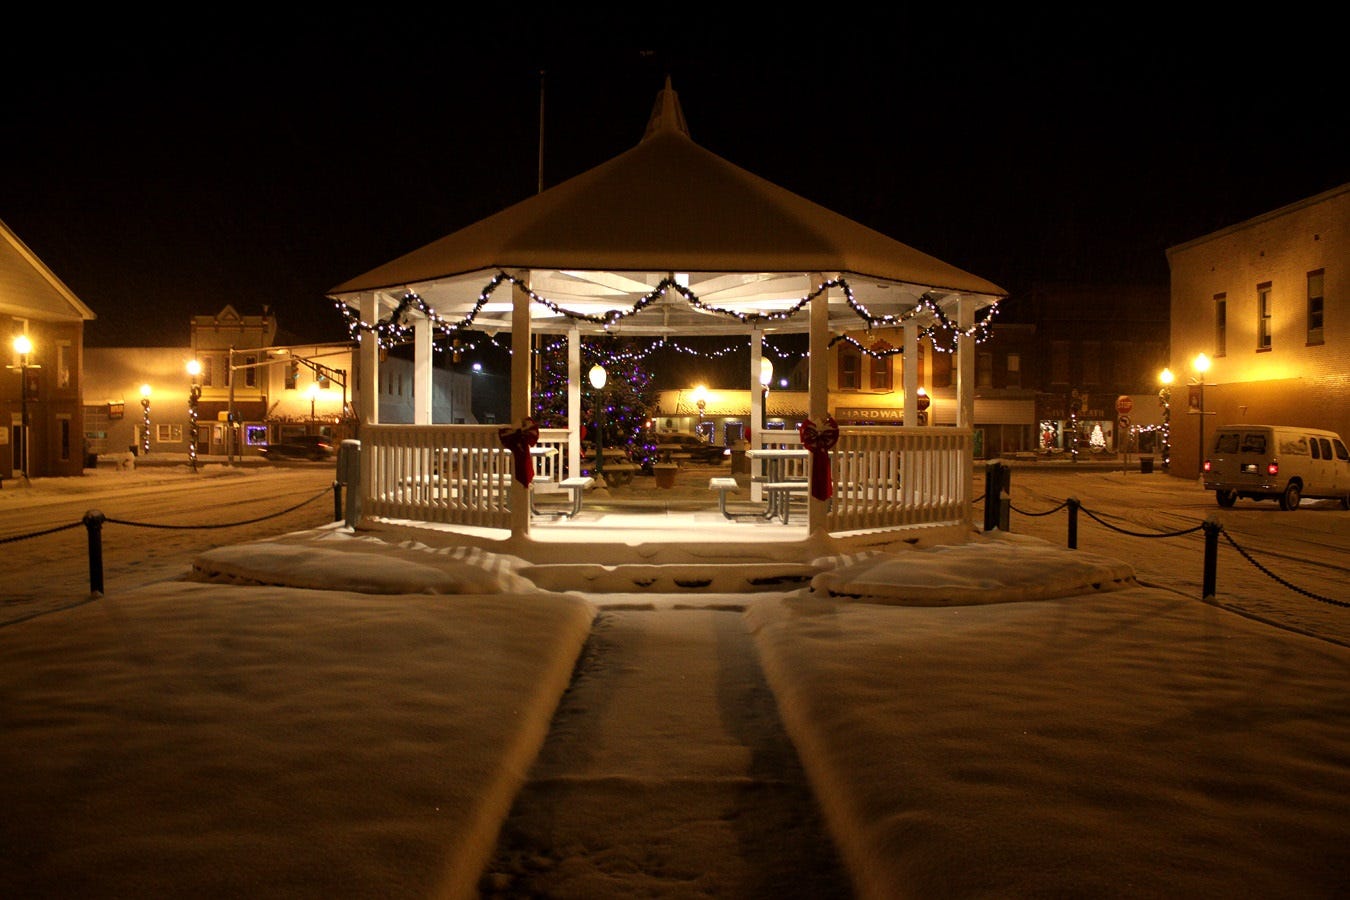 The public square on winter's night.